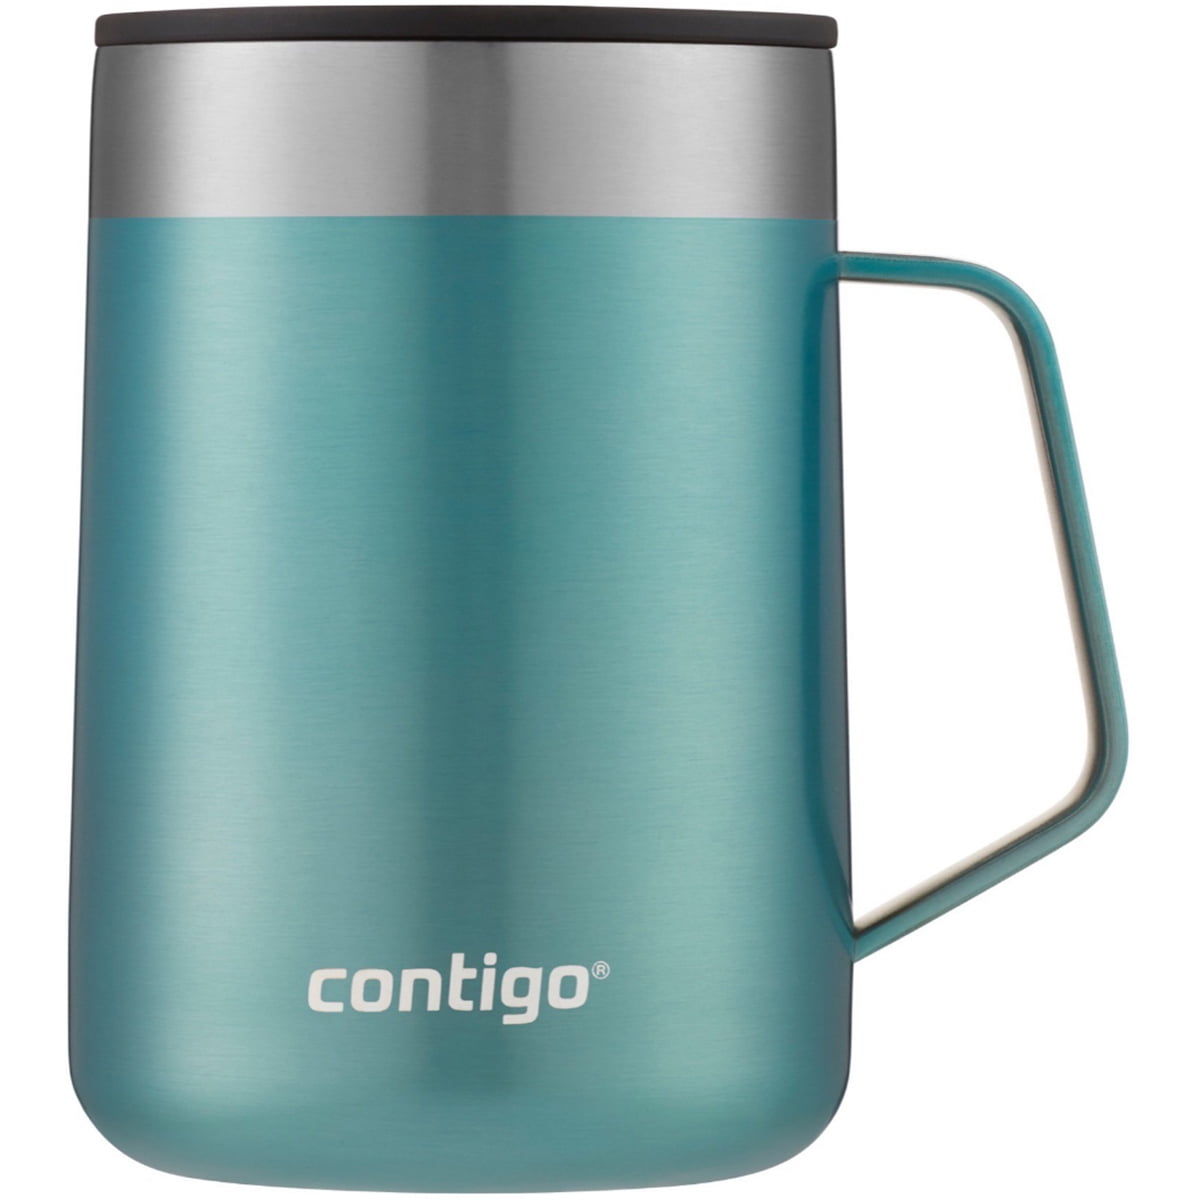 Contigo Streeterville Stainless Steel Mug with Splash-Proof Lid